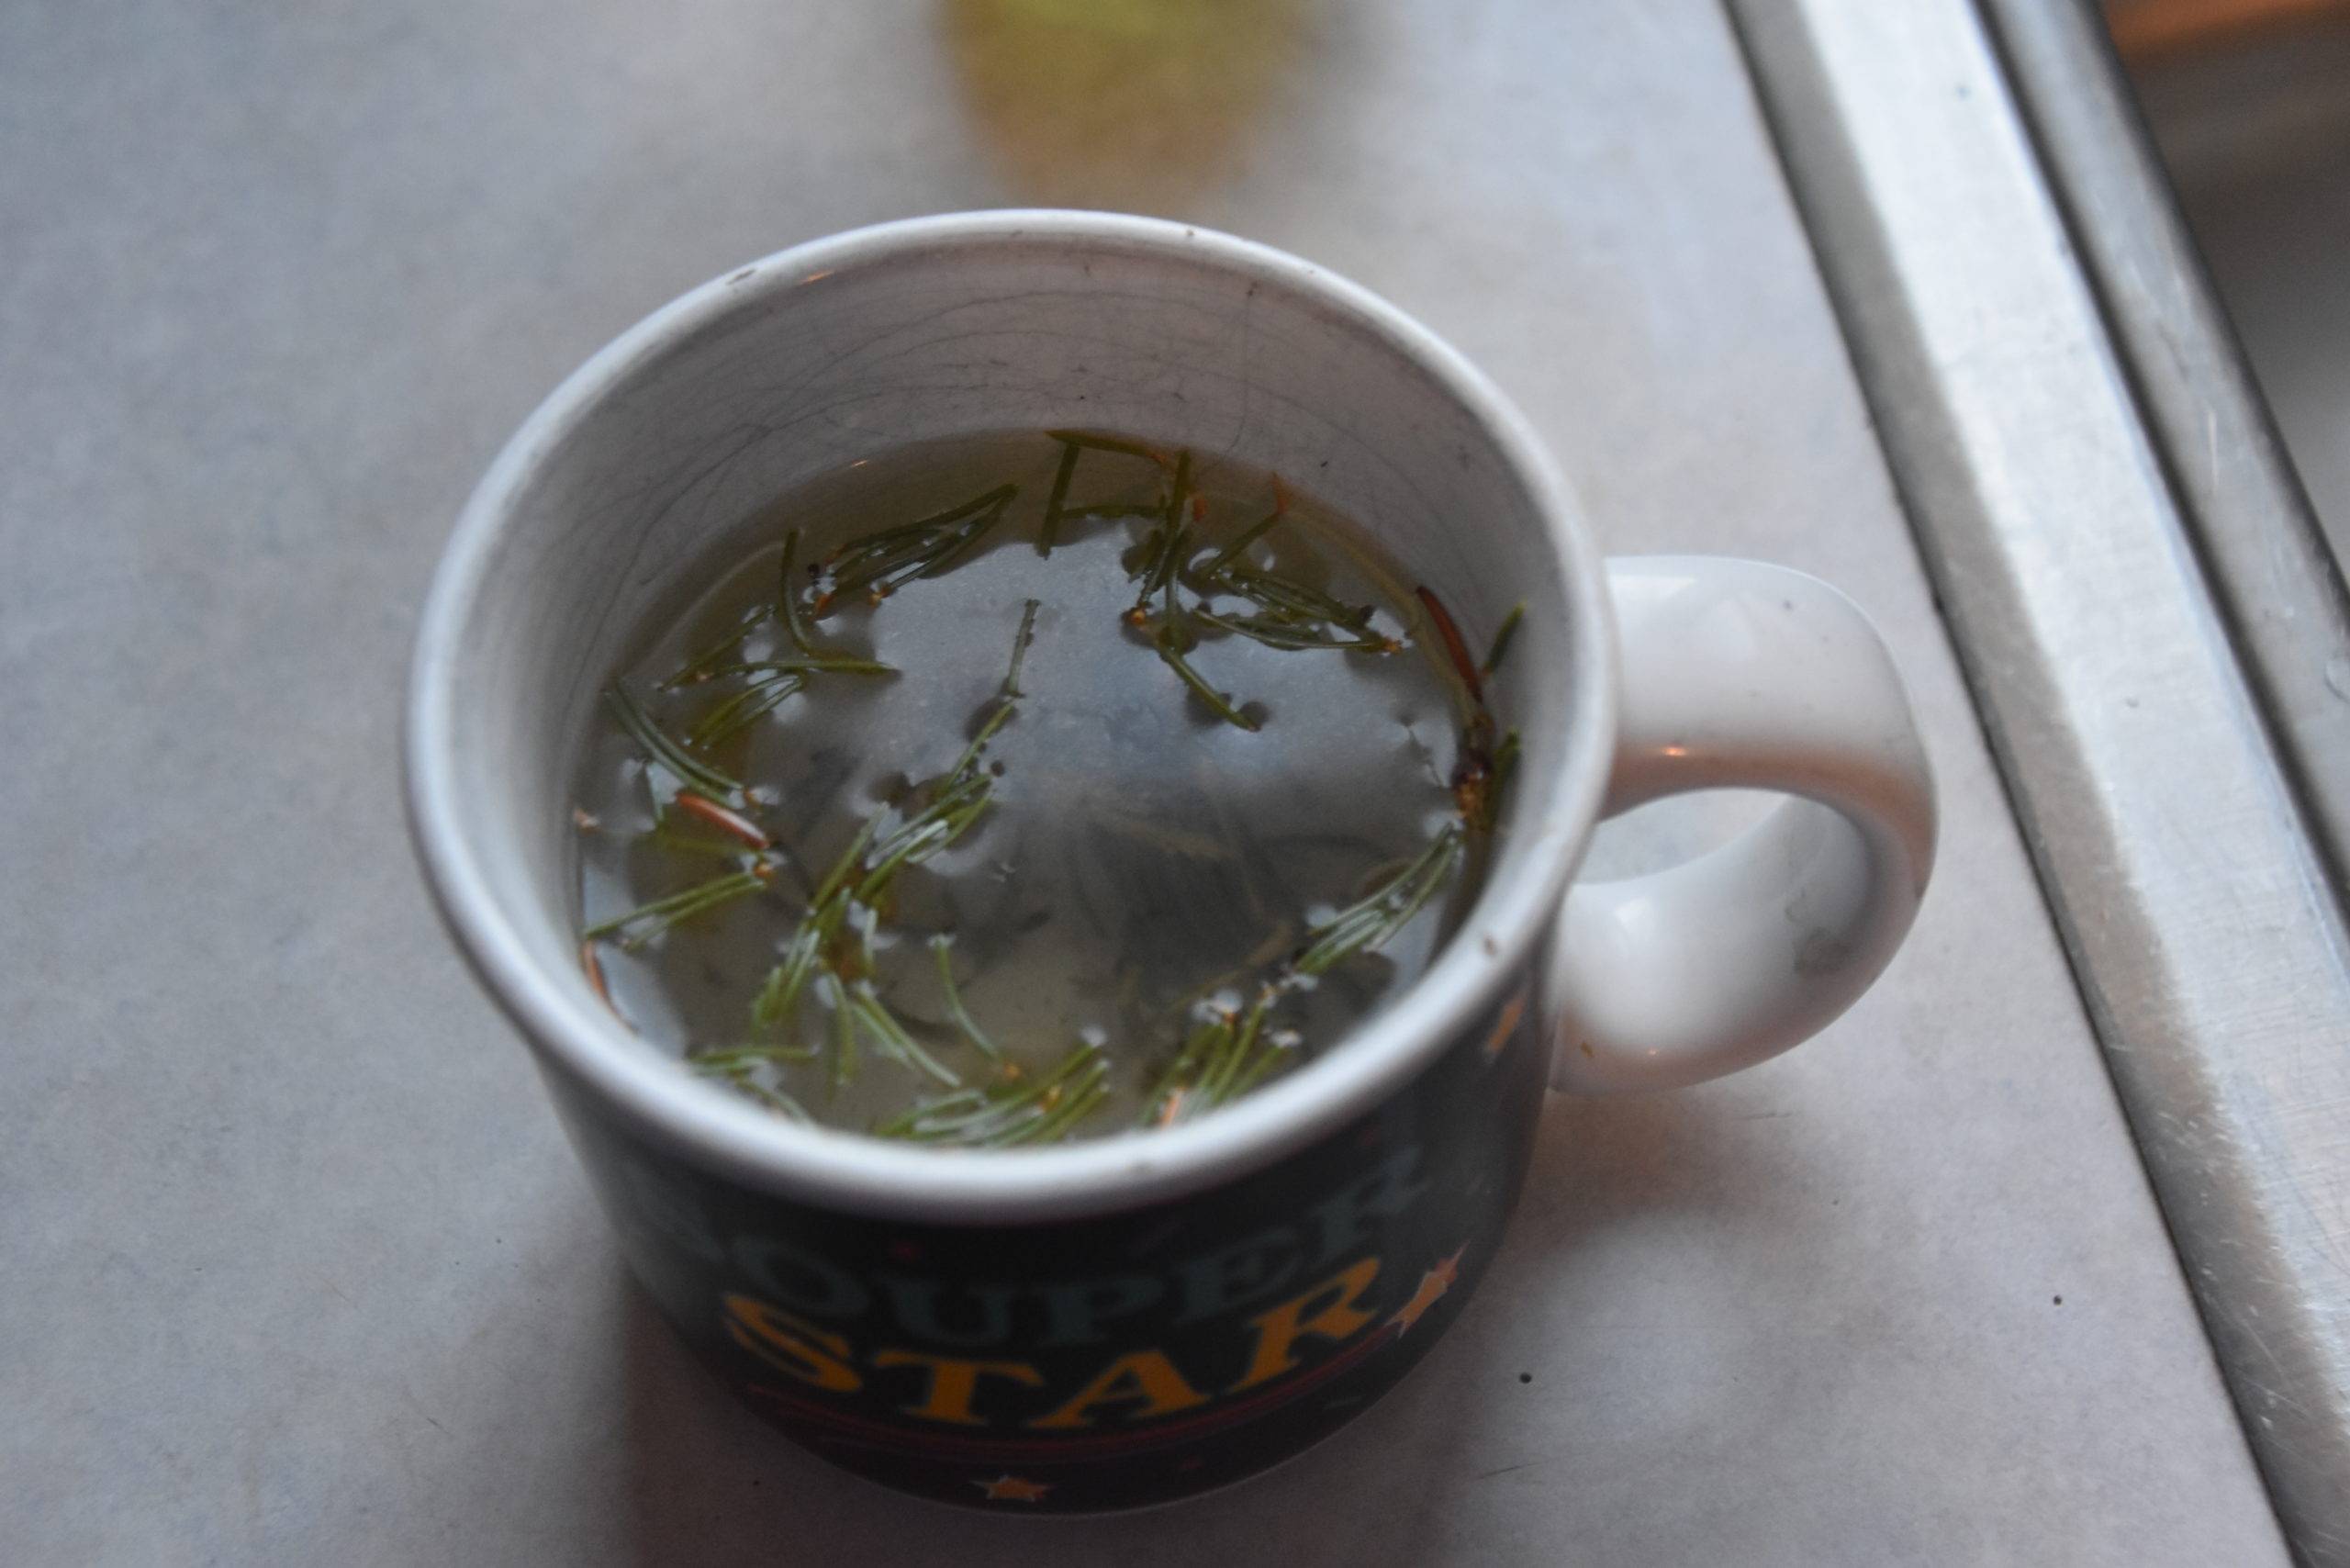 brewed cup of pine needle tea in ceramic mug